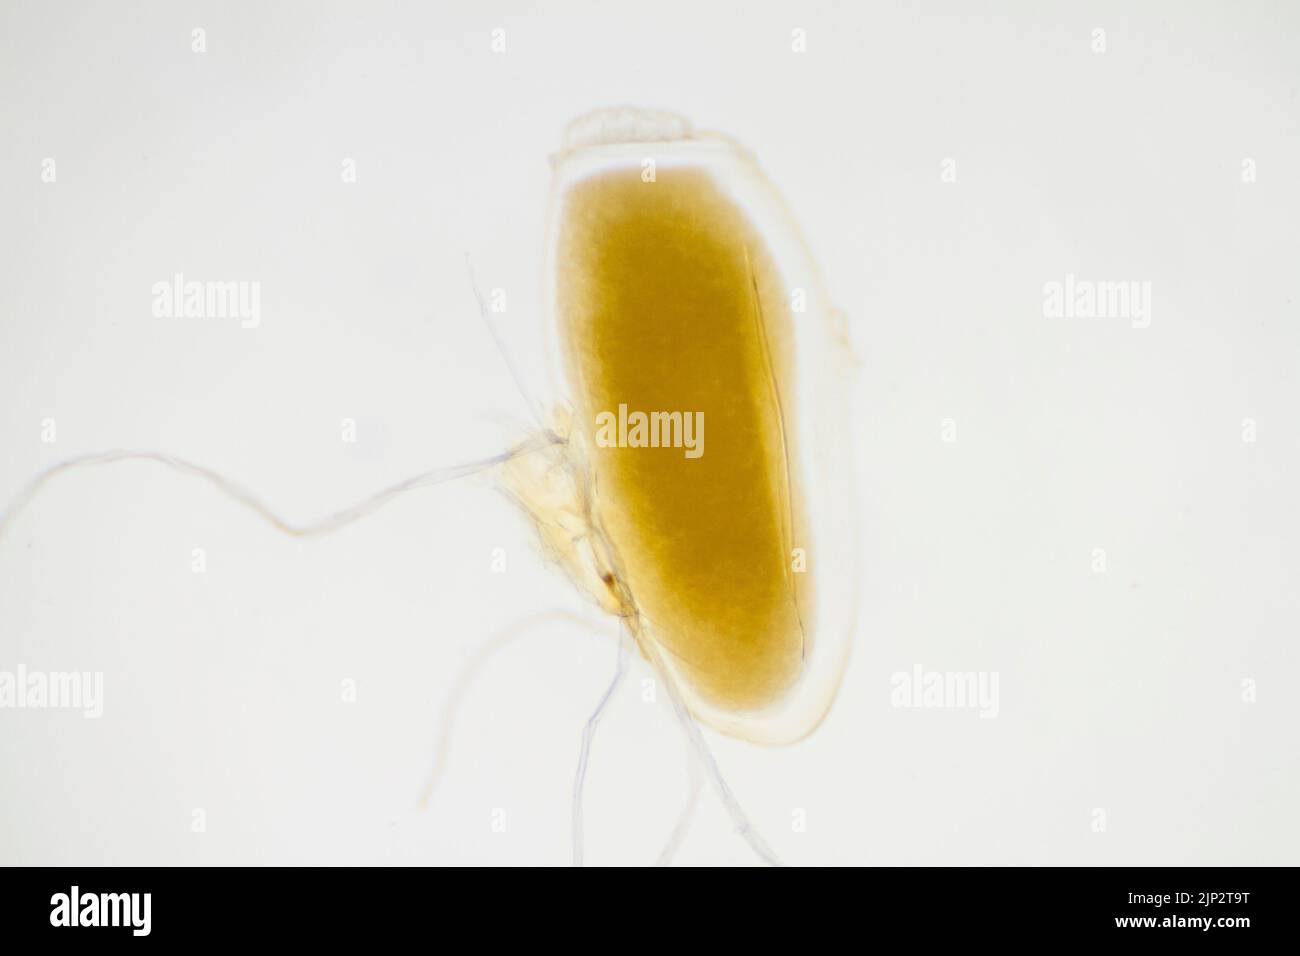 Pediculus humanus corporis egg. Microscope view of the body louse egg. Stock Photo